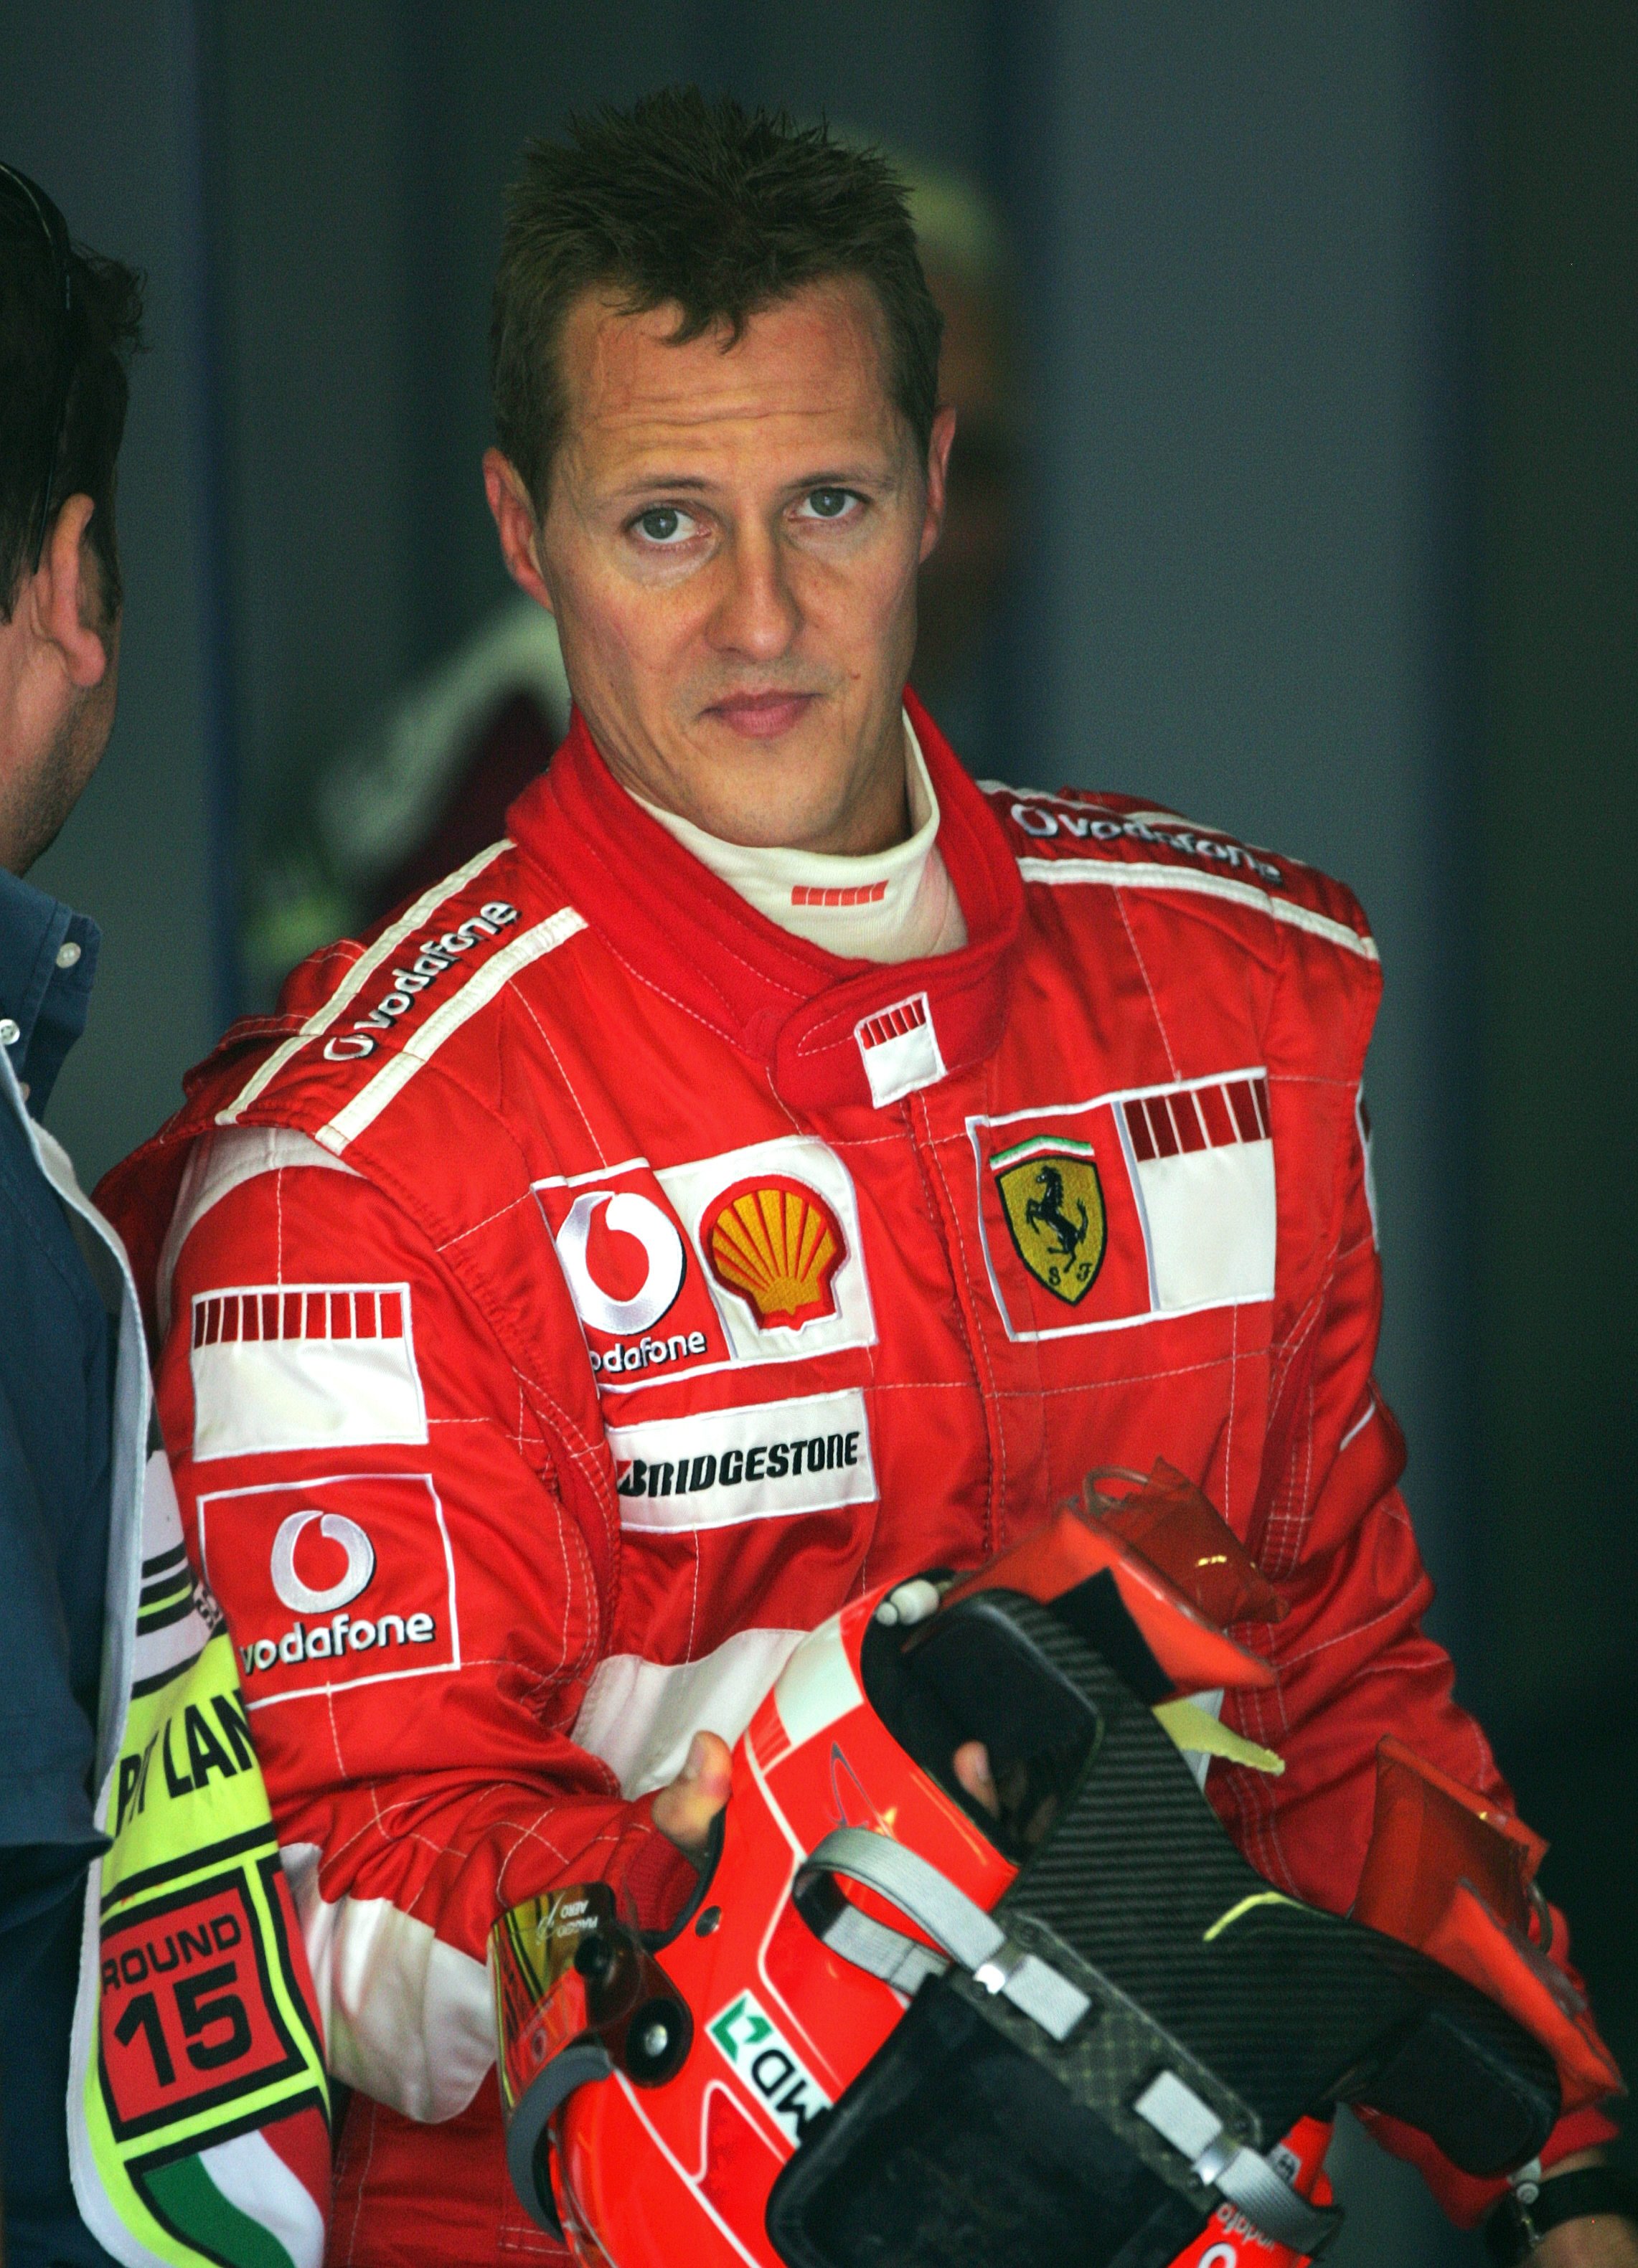 Schumacher won seven Formula One world championships during a stellar career